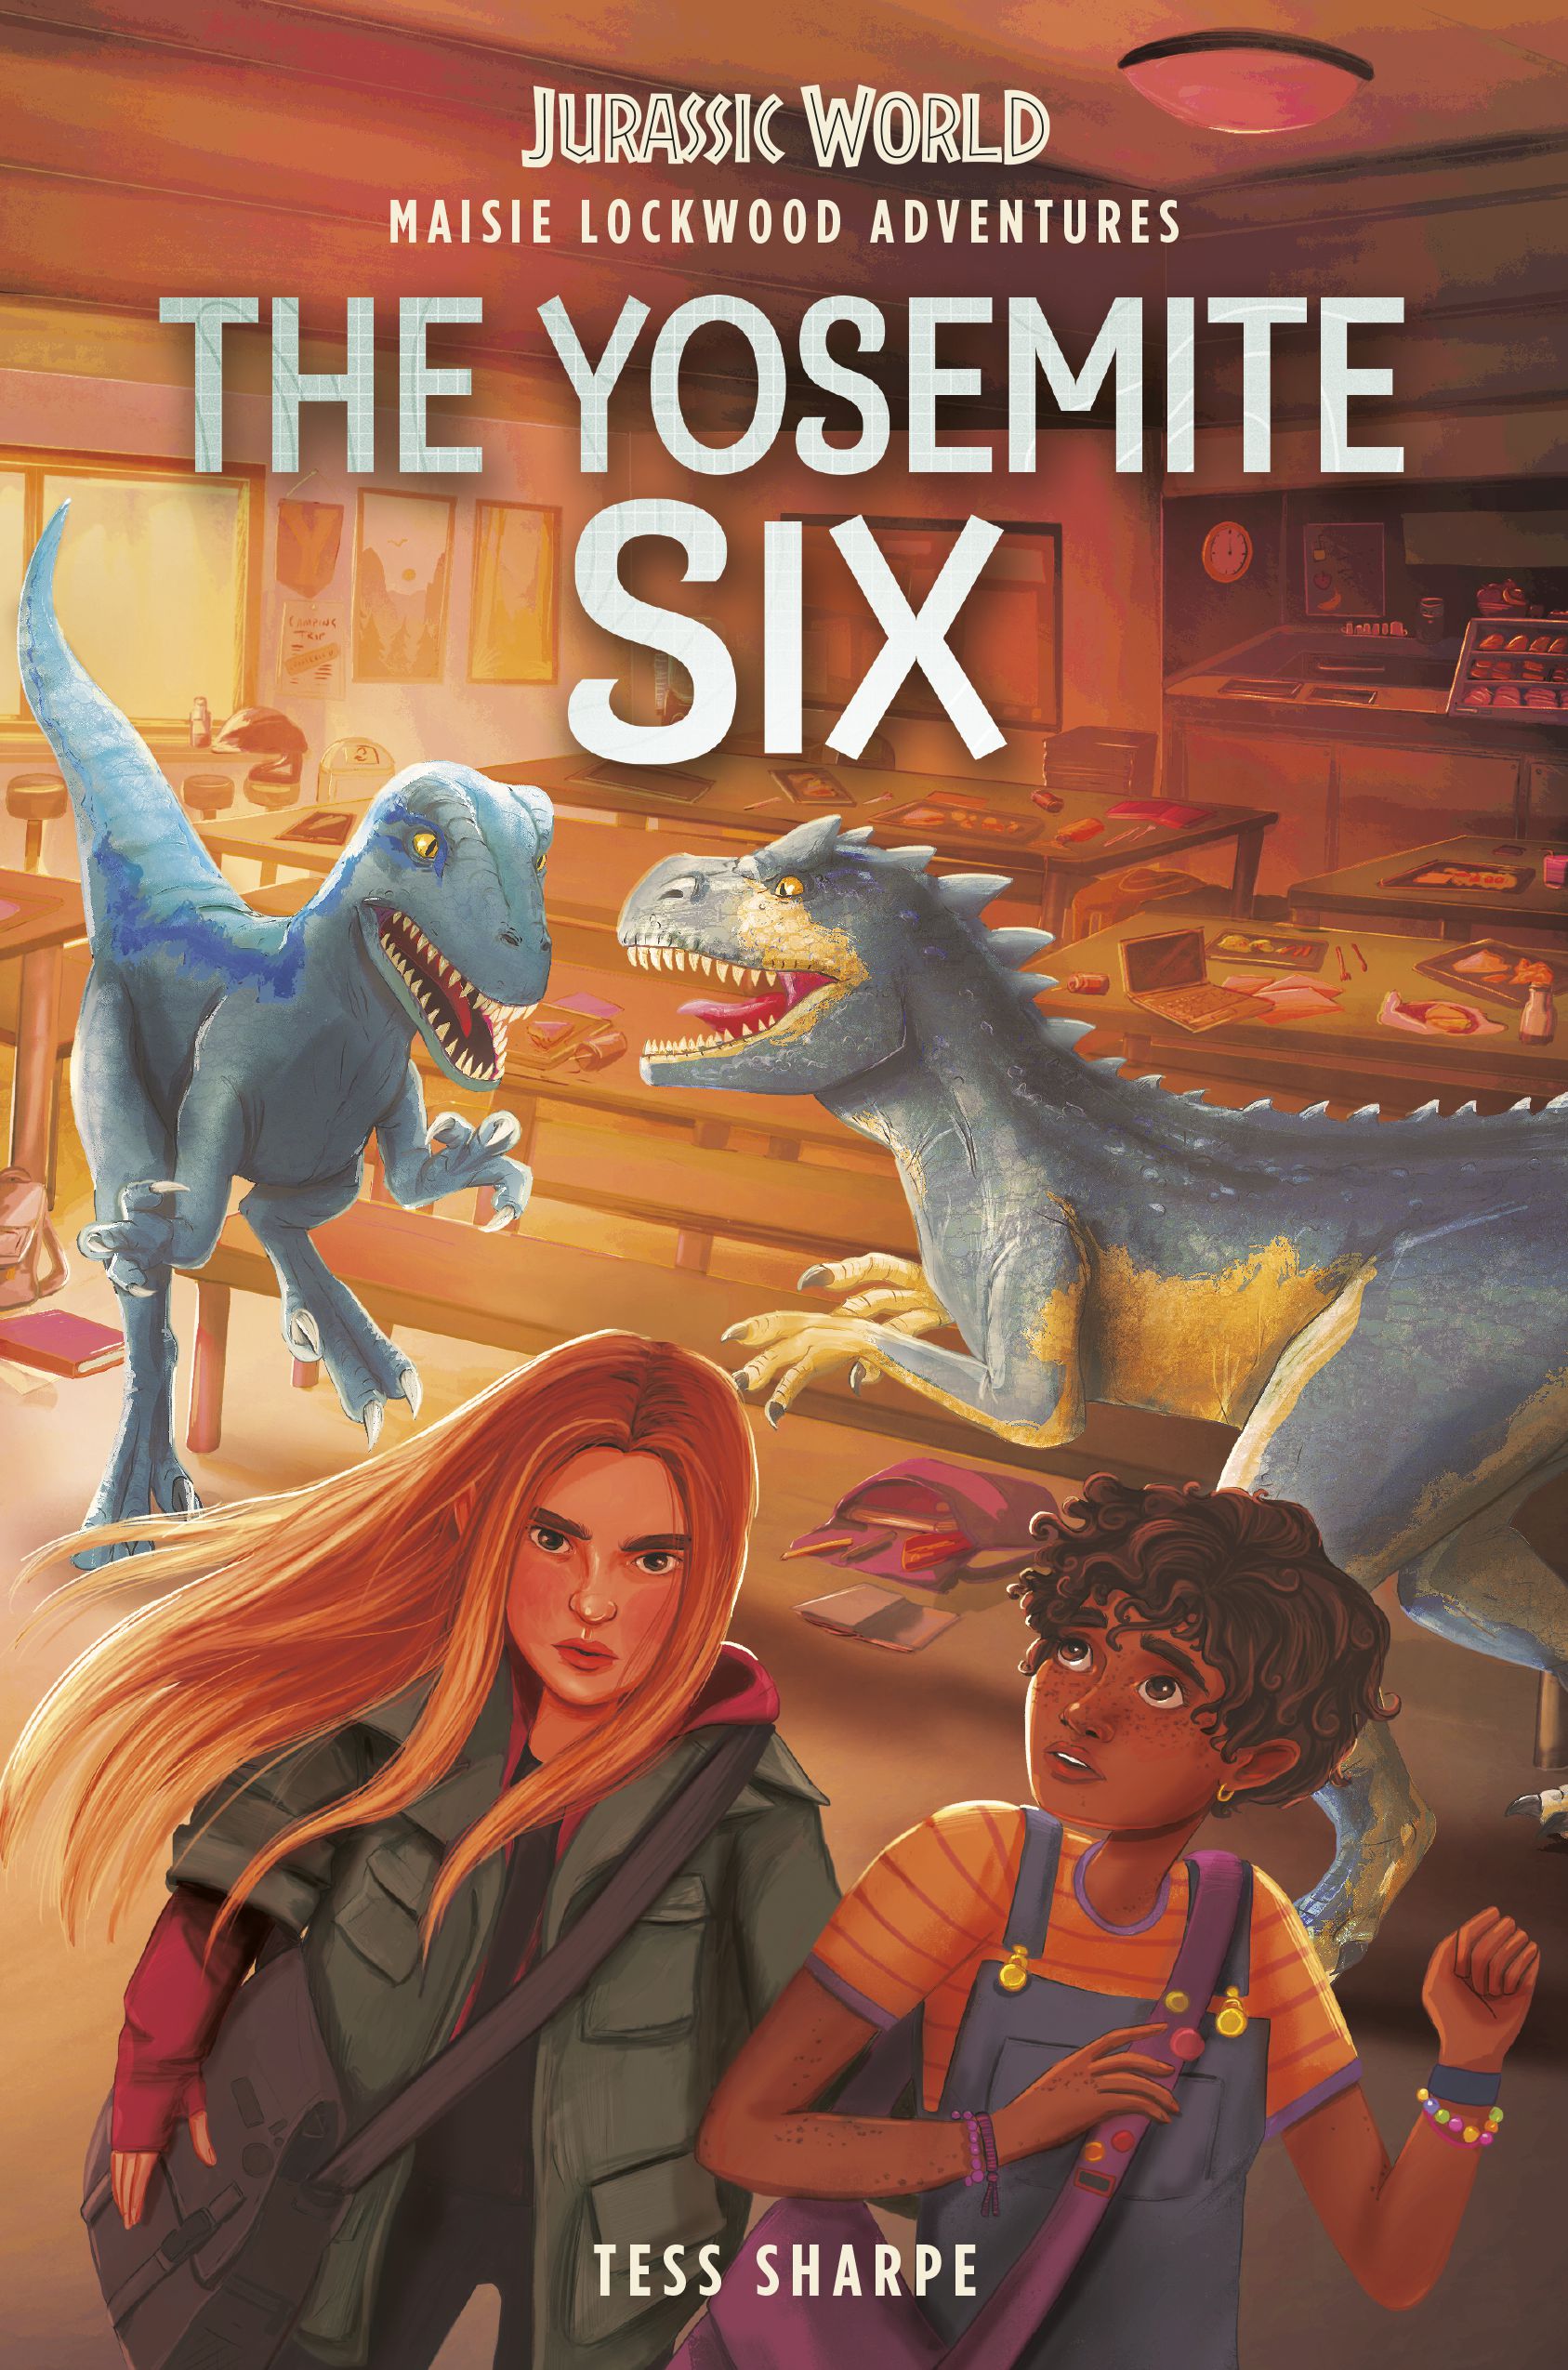 Maisie Lockwood Adventures #2 The Yosemite Six (Jurassic World)